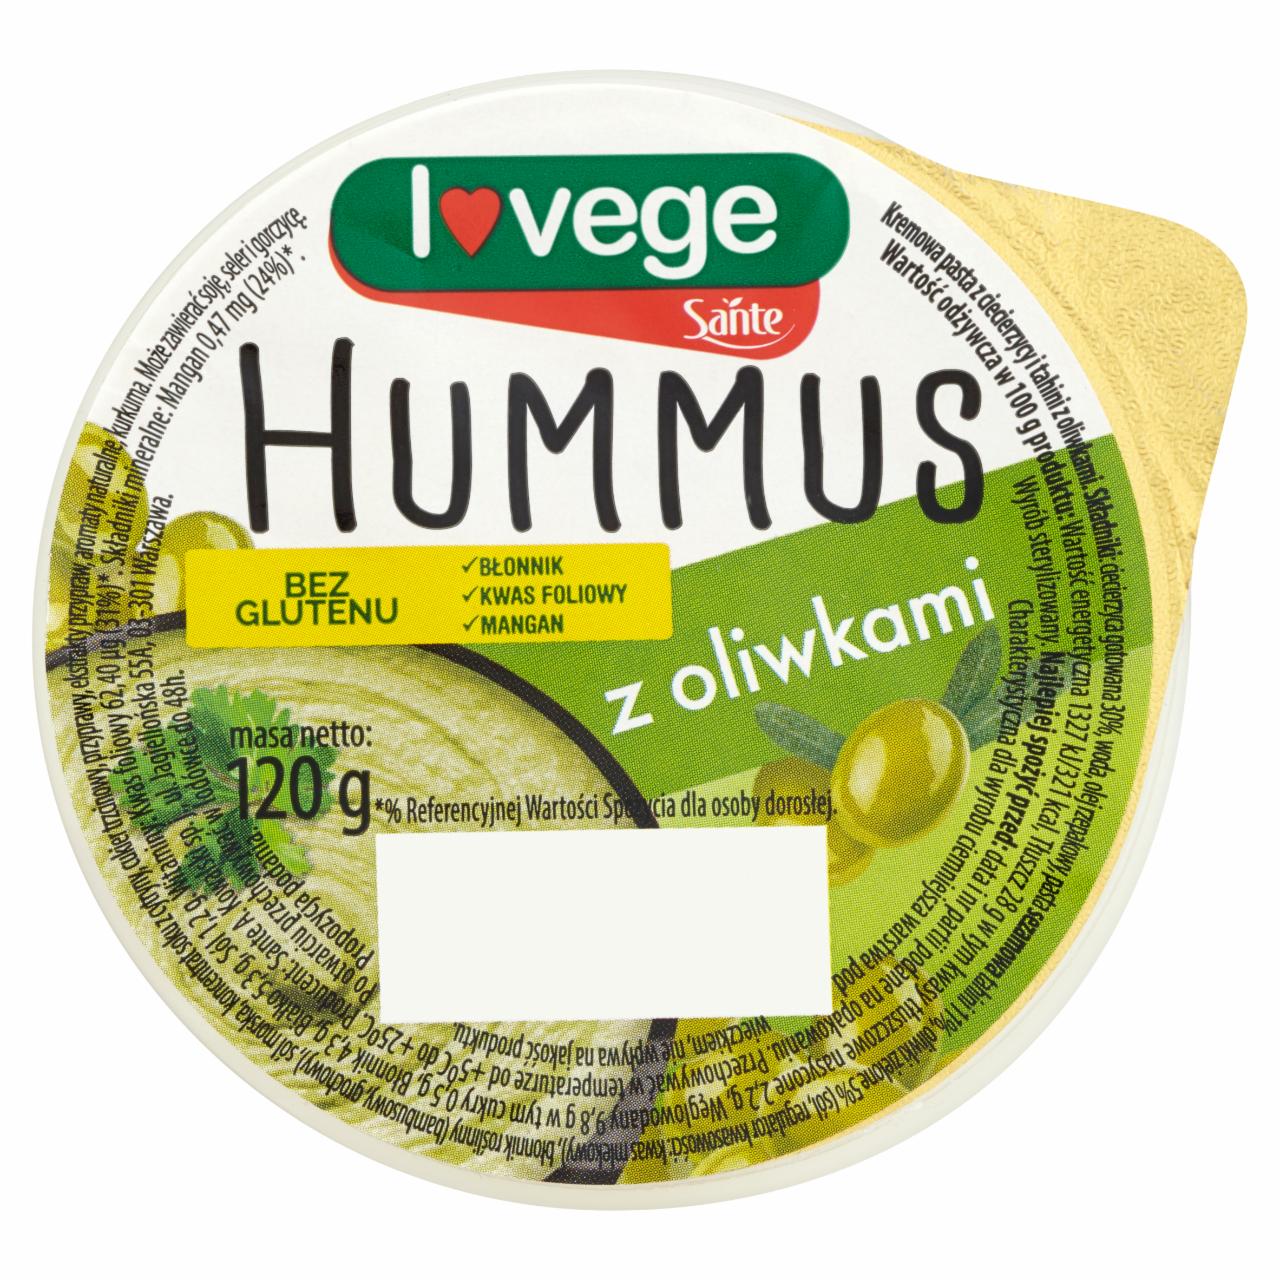 Zdjęcia - Sante Hummus z oliwkami 120 g